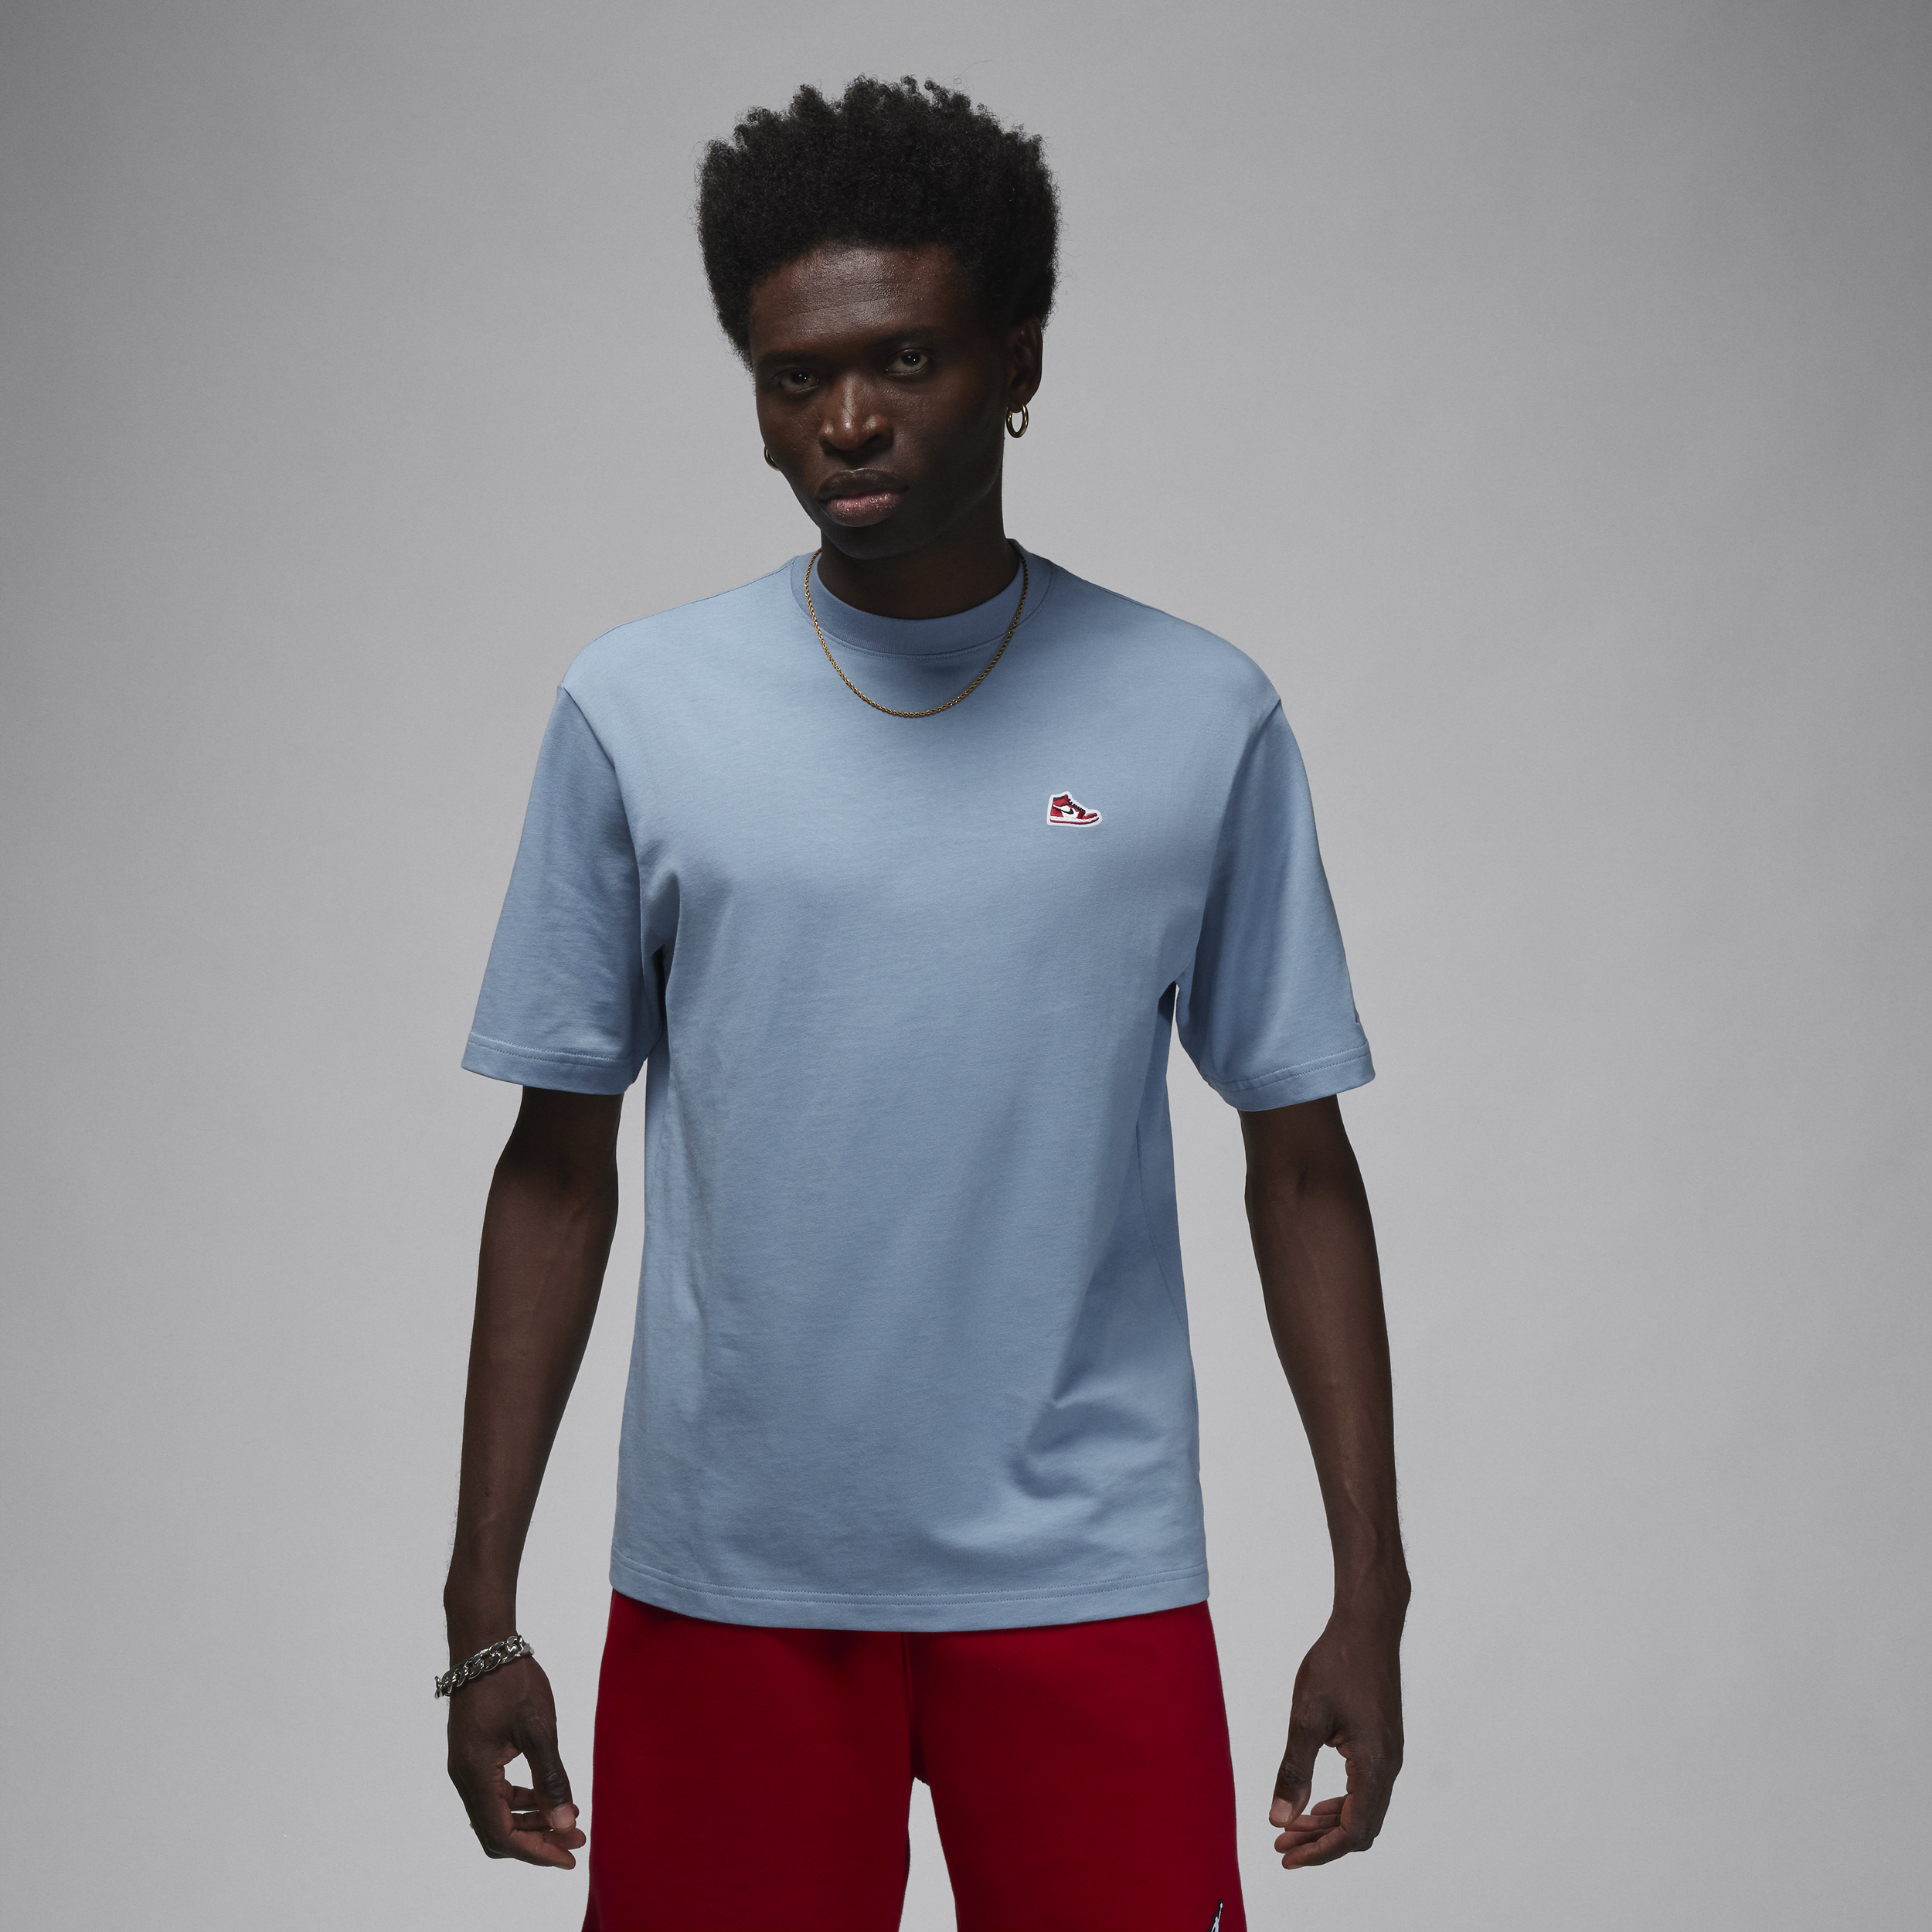 Jordan Brand-T-shirt til mænd - blå